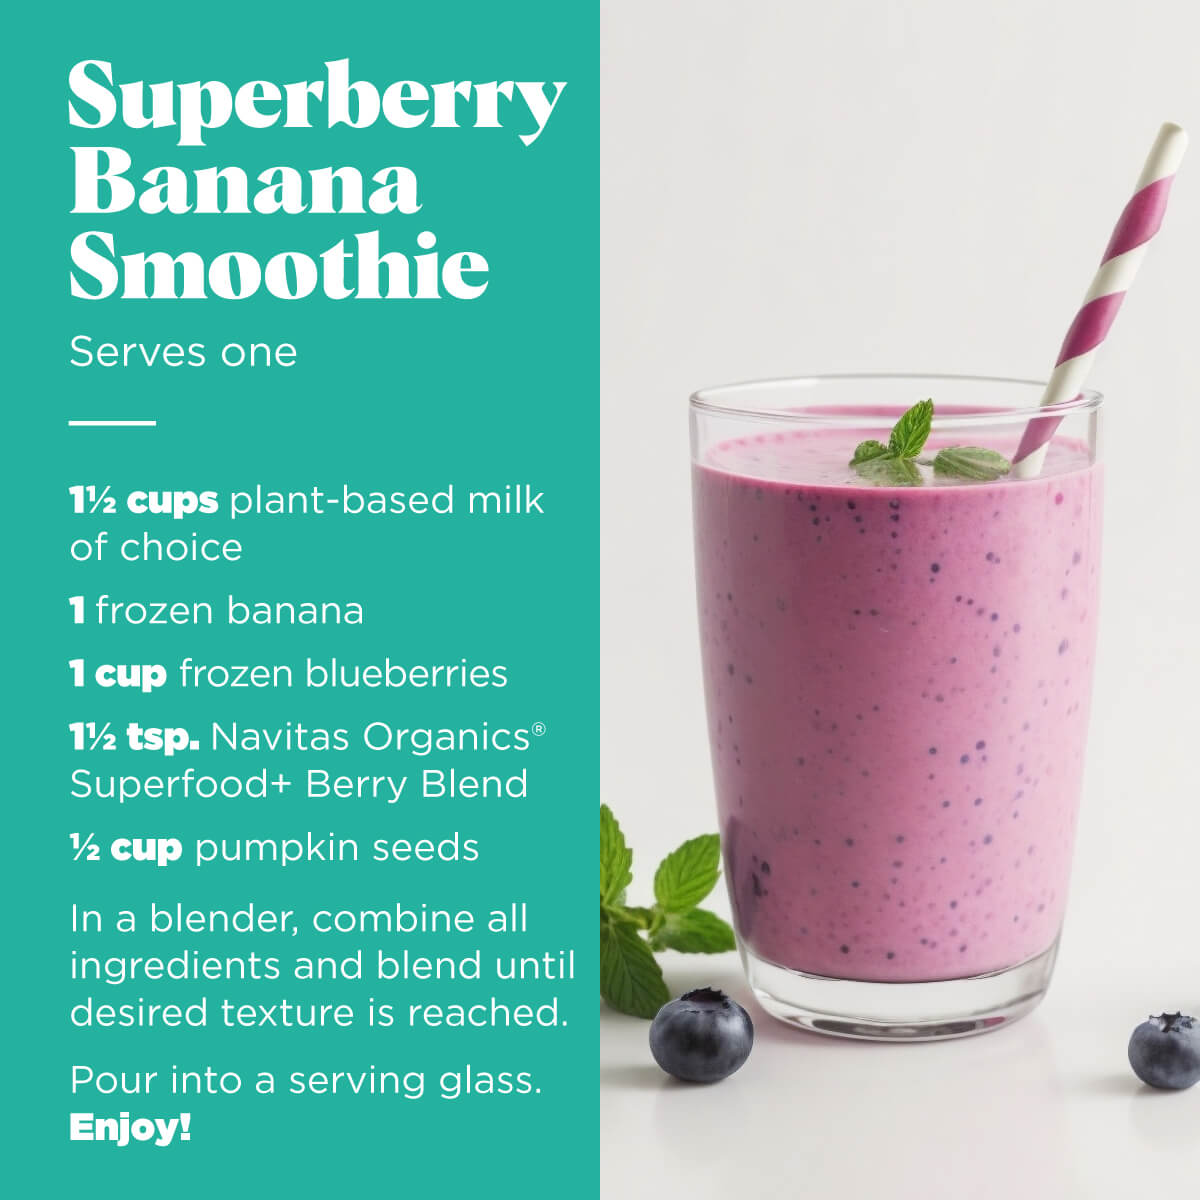 Superberry Banana Smoothie Recipe made with Navitas Organics Superfood+ Berry Blend